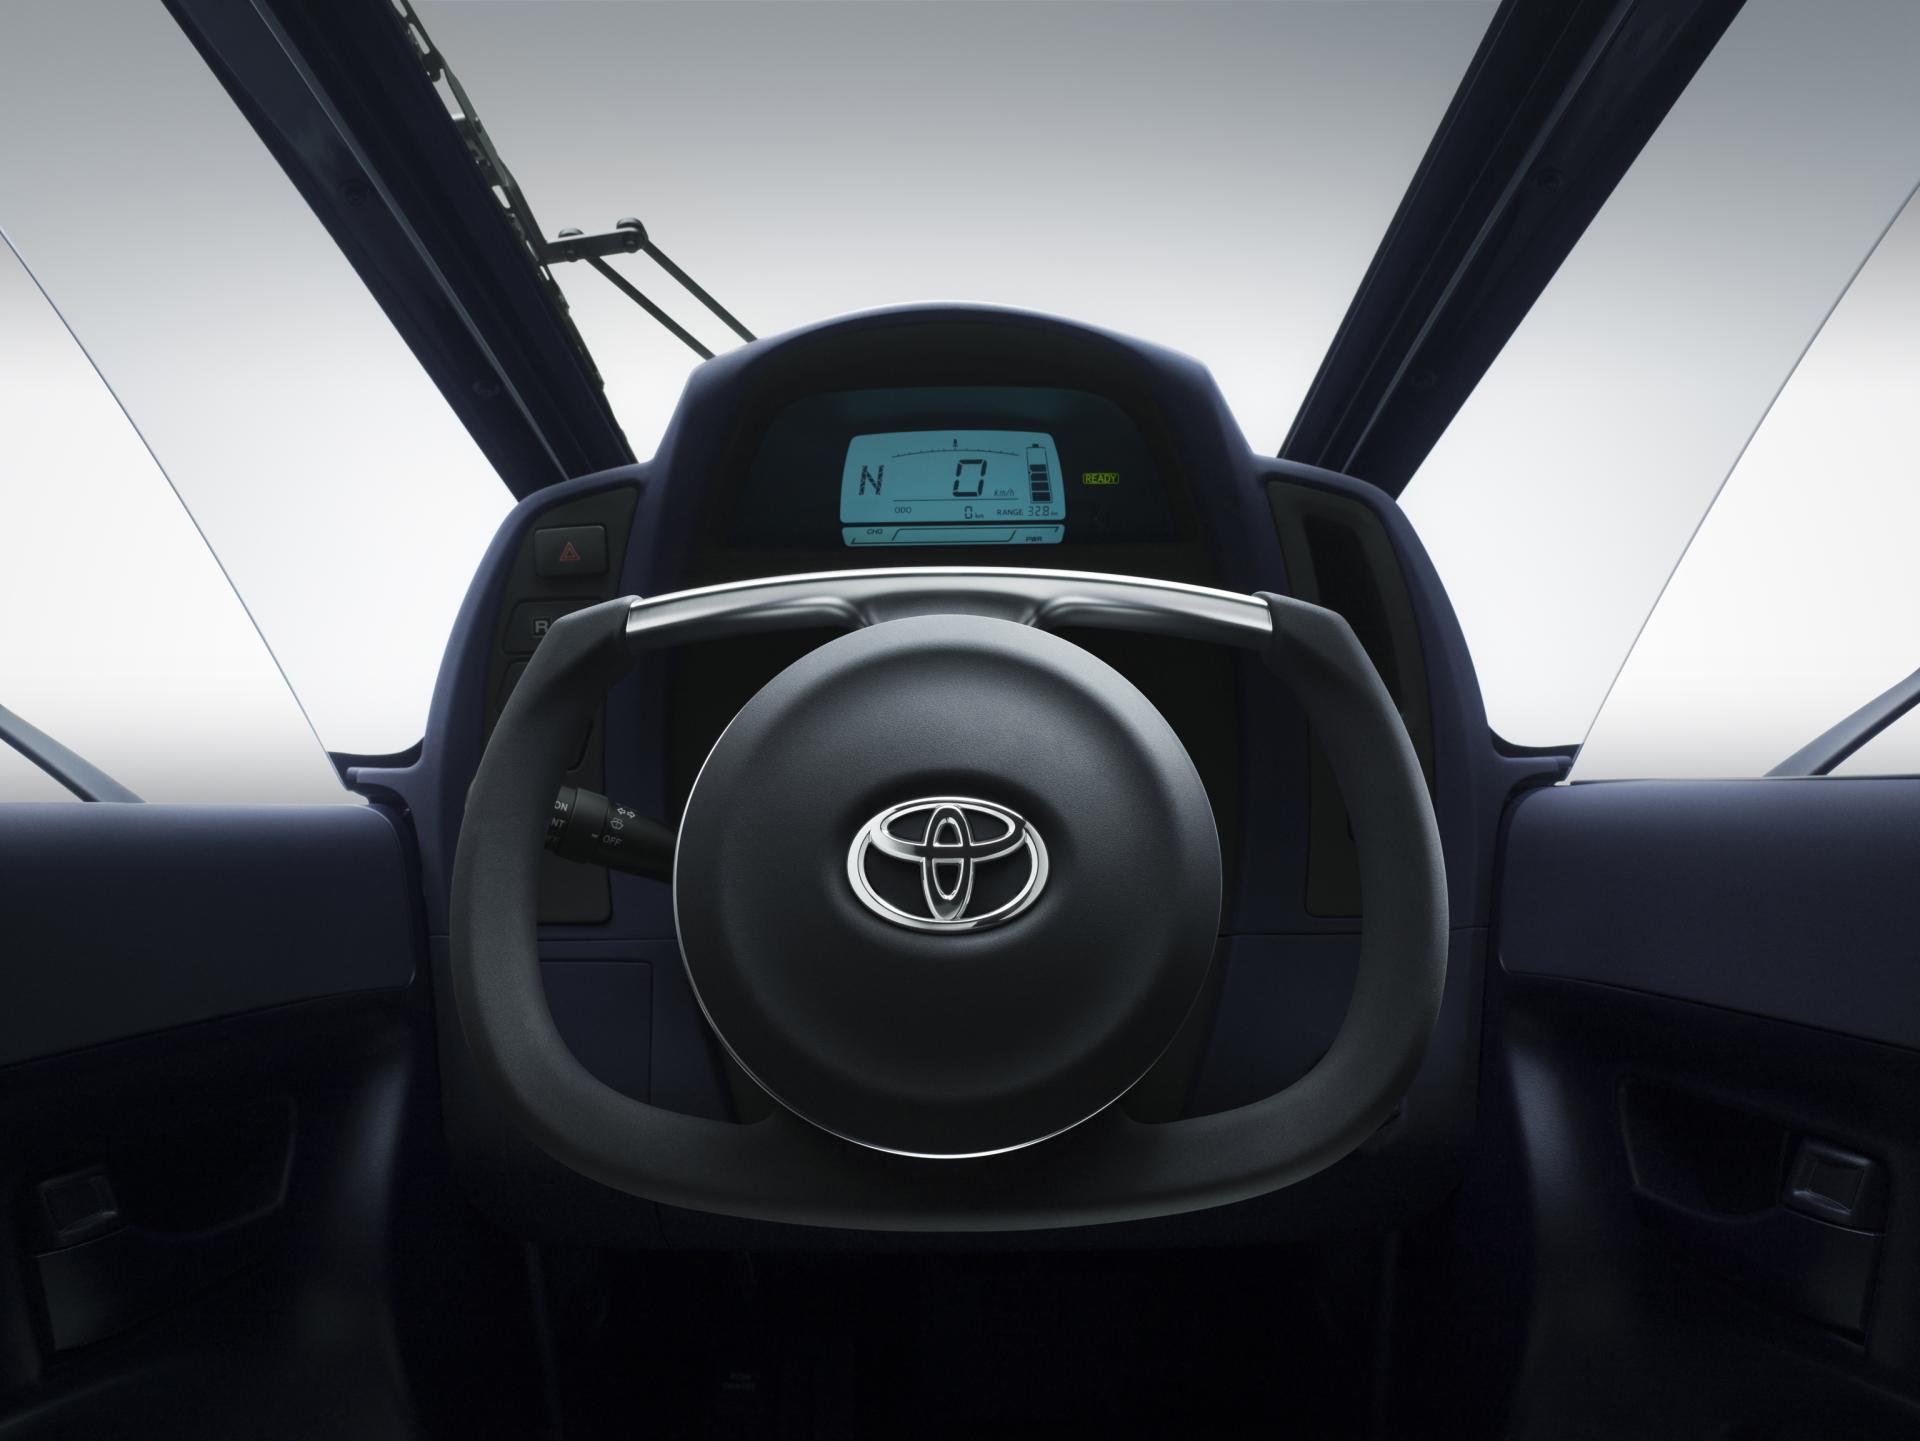 2013 Toyota i-Road Concept